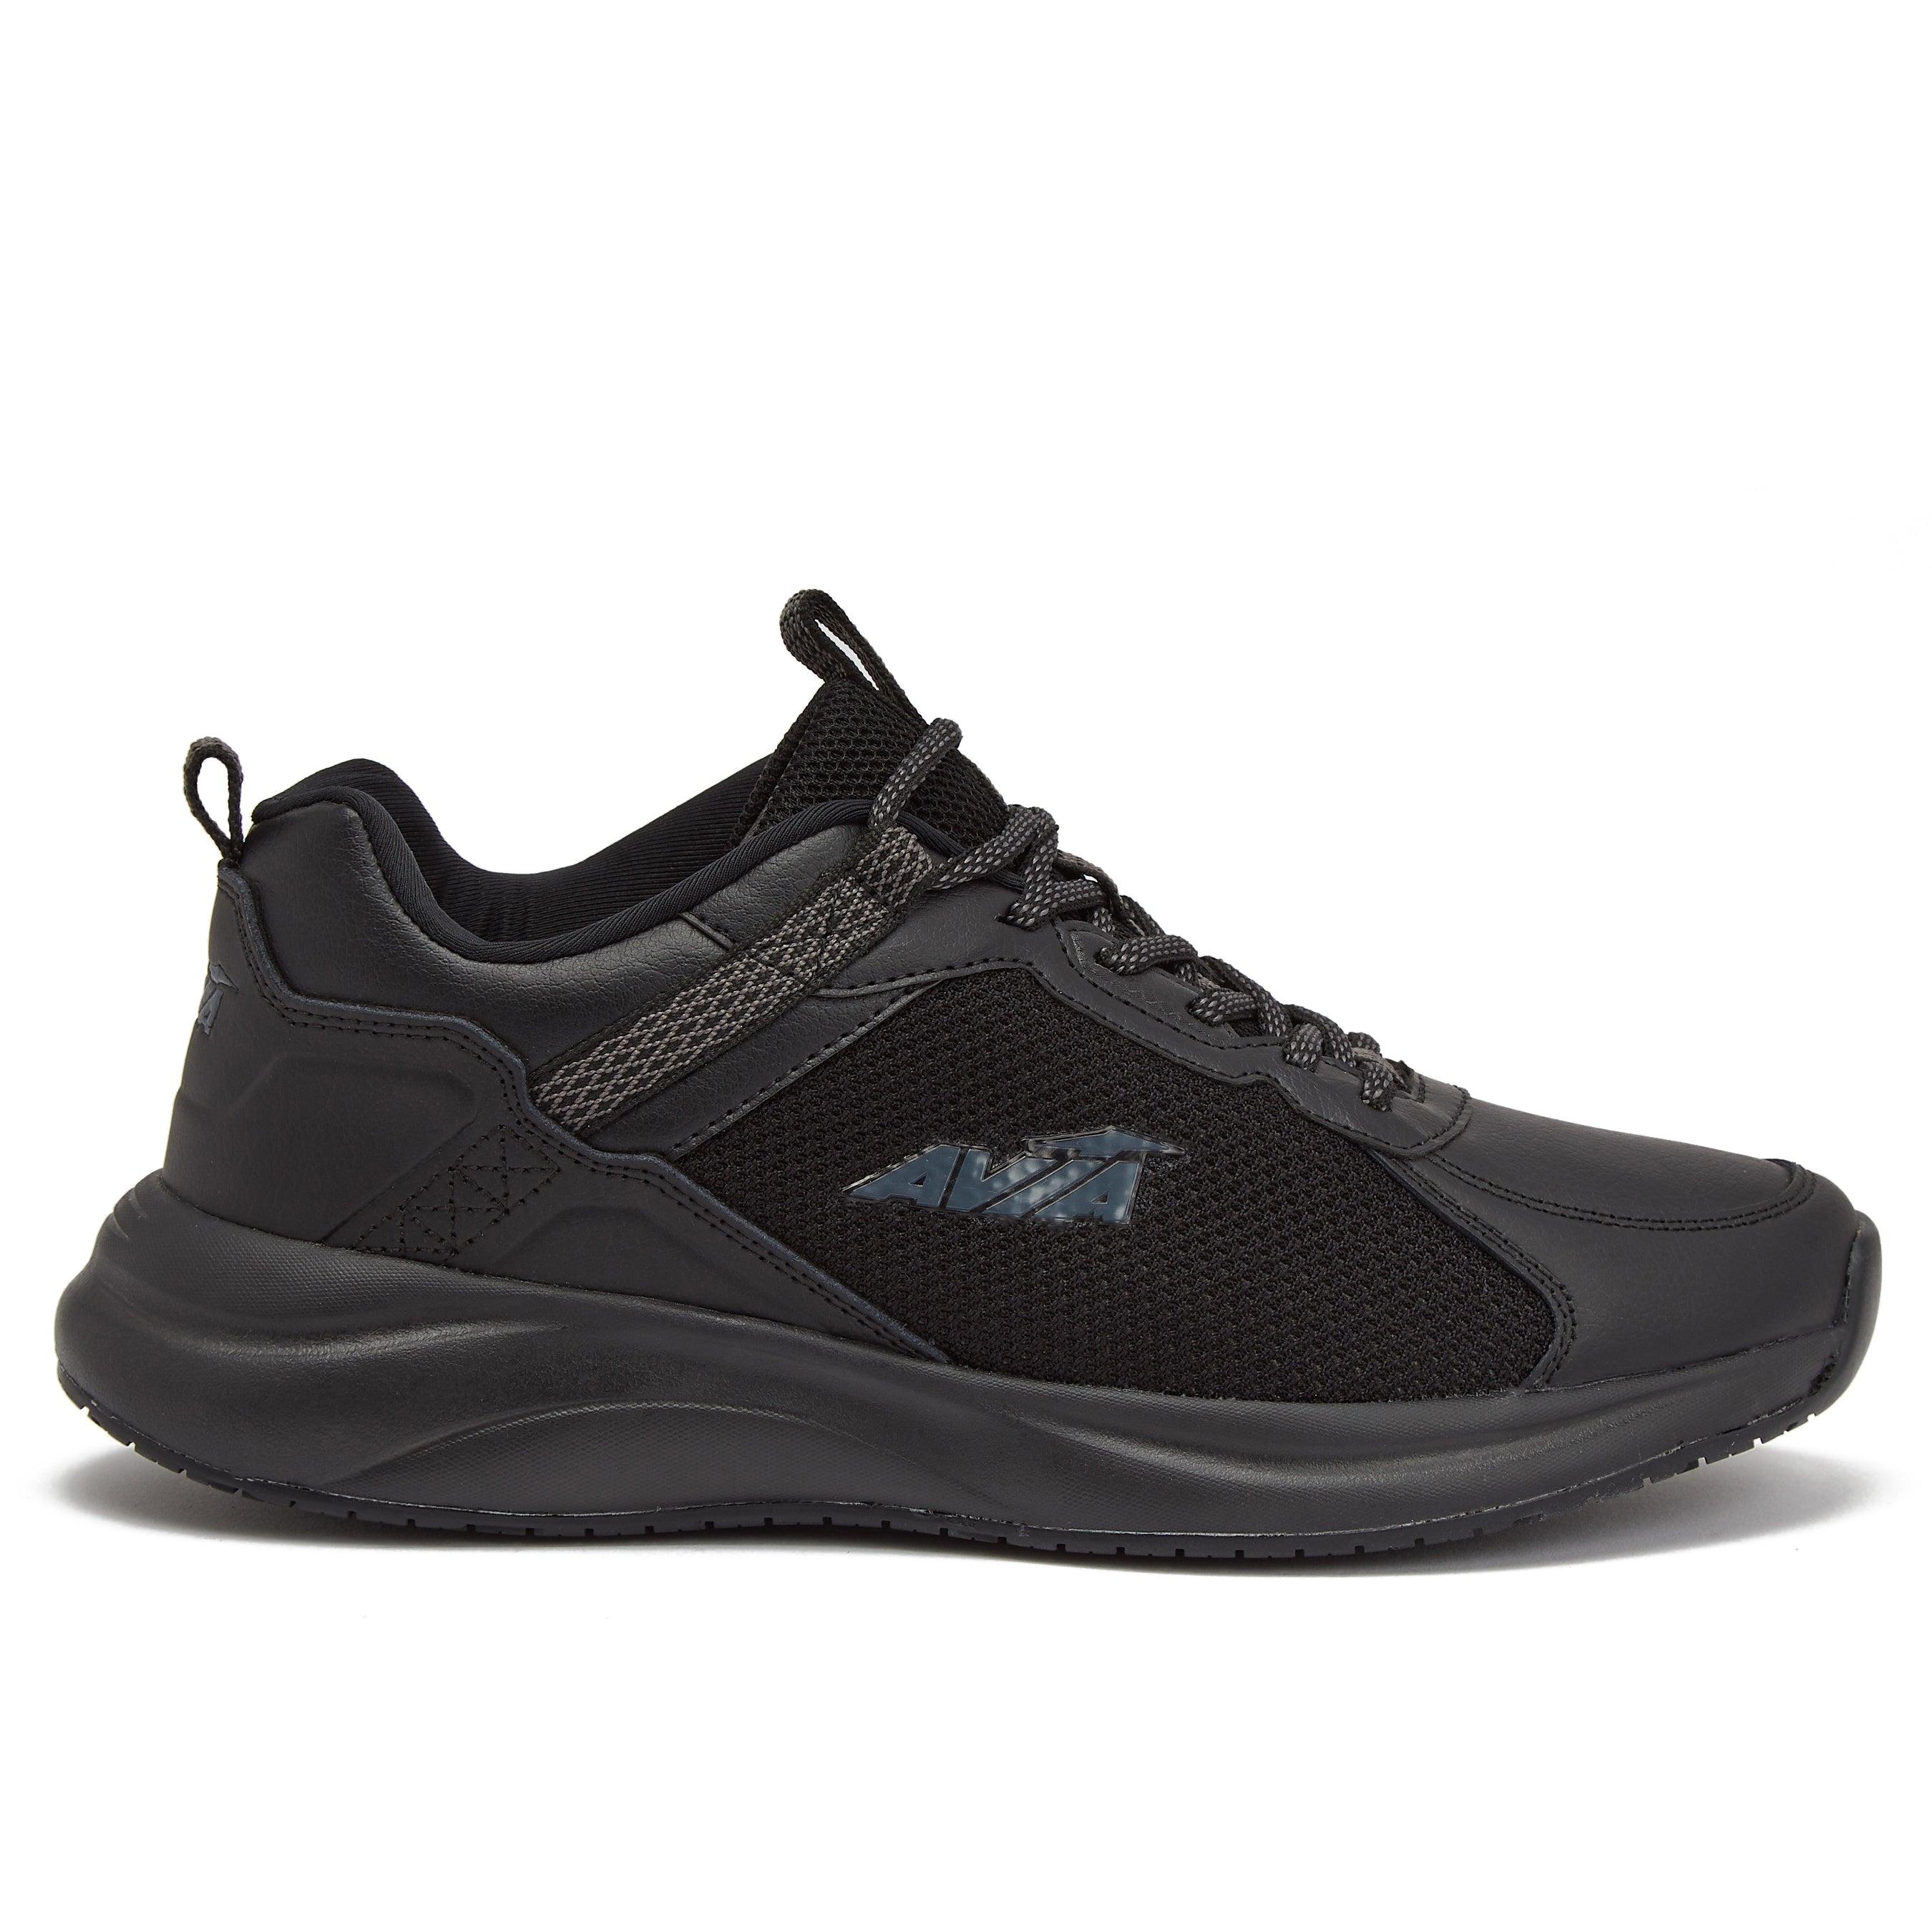 Avia Women's Grey Running All-Terrain Shoes Sneakers Size 11 BRAND NEW